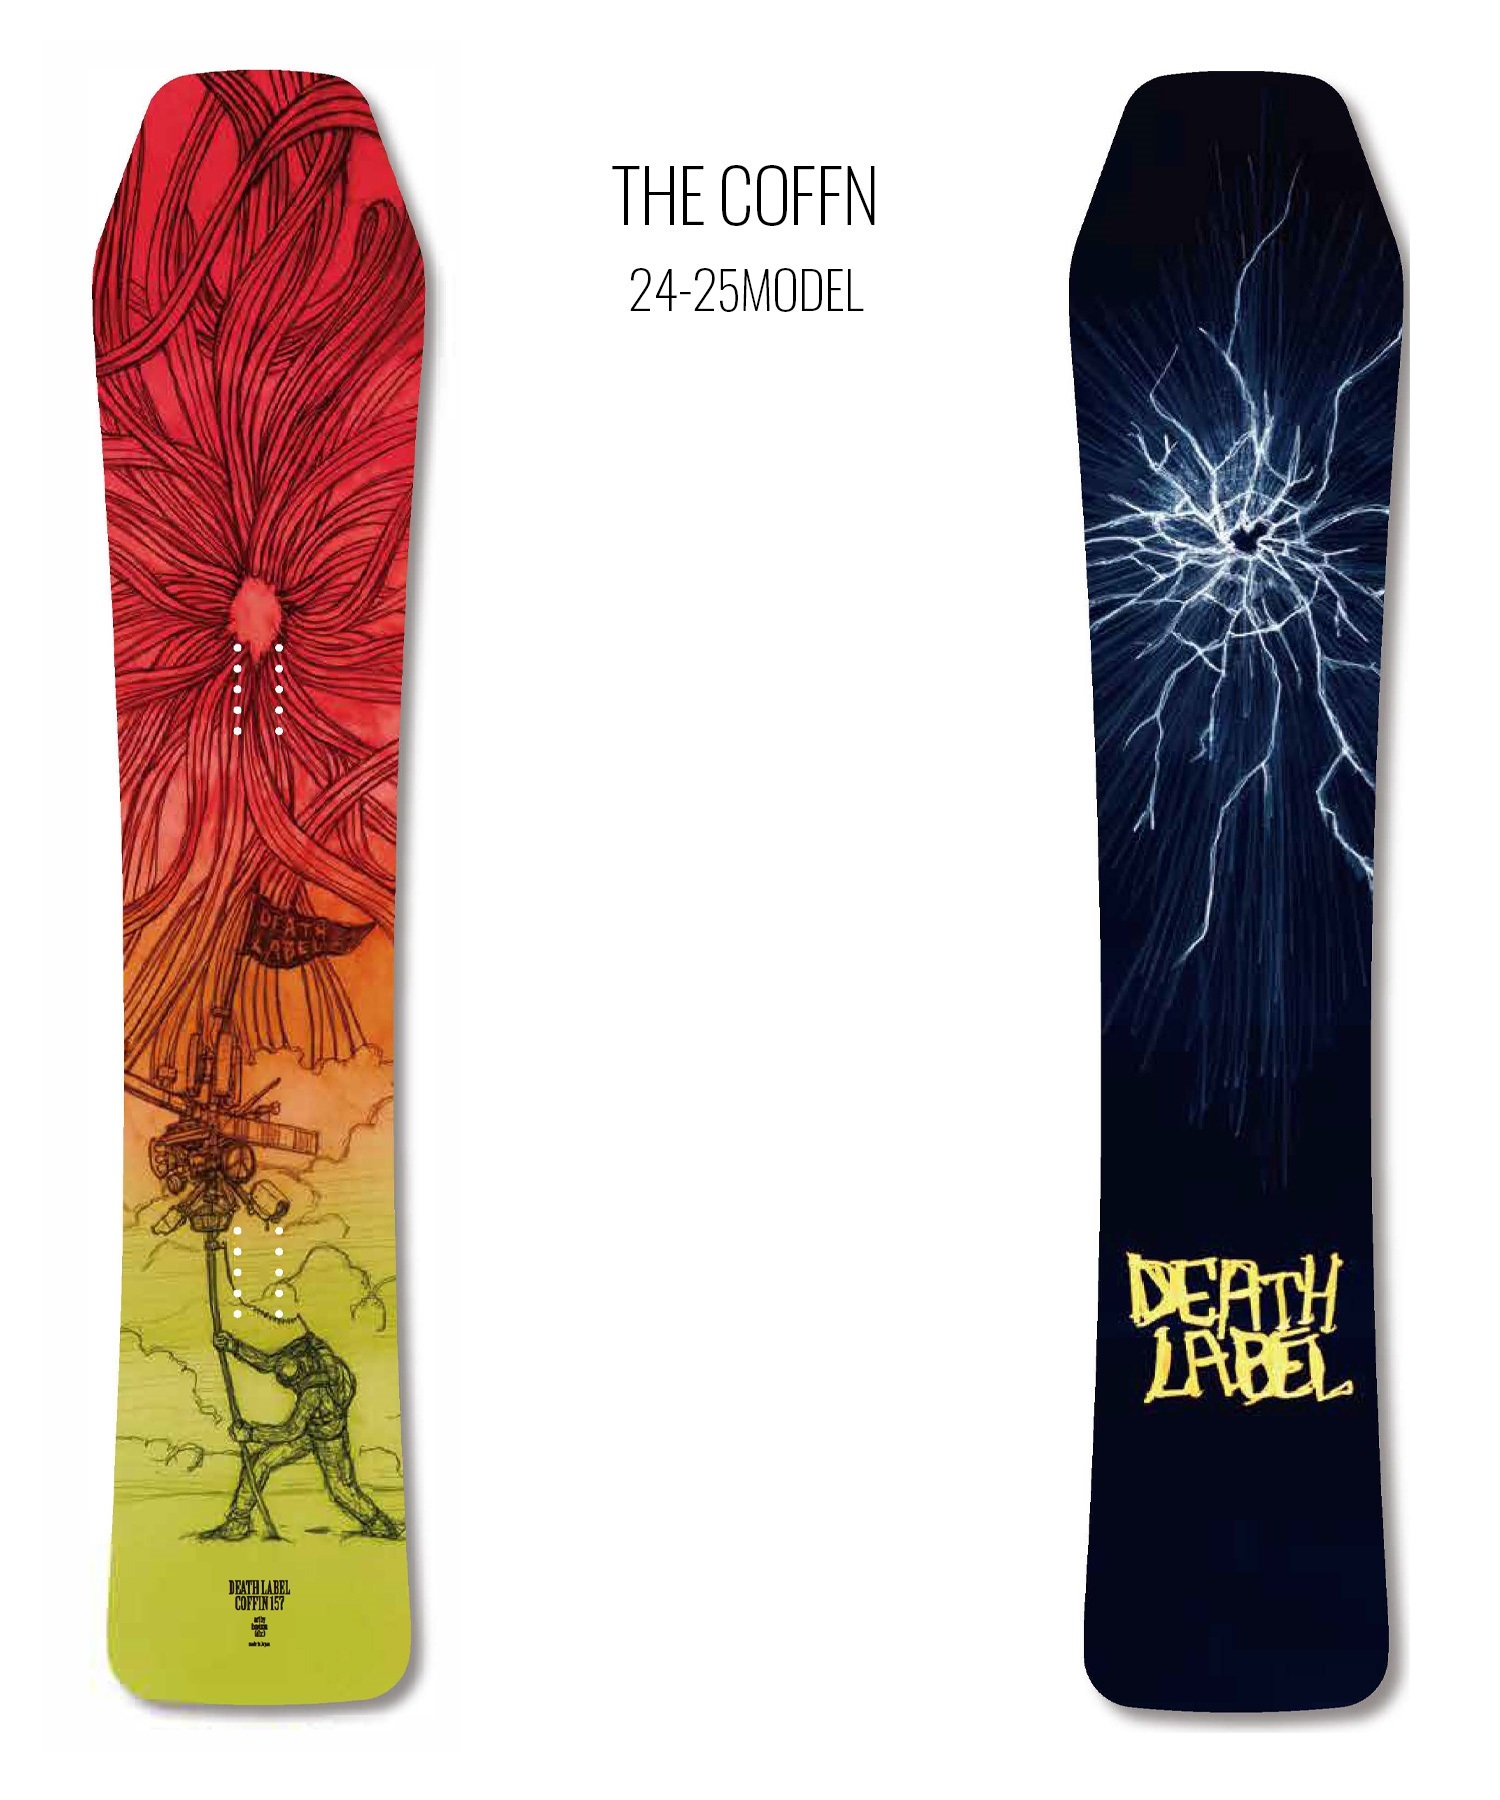 DEATH LABEL】THE COFFIN Snowboard deck - www.trekdriving.com.au